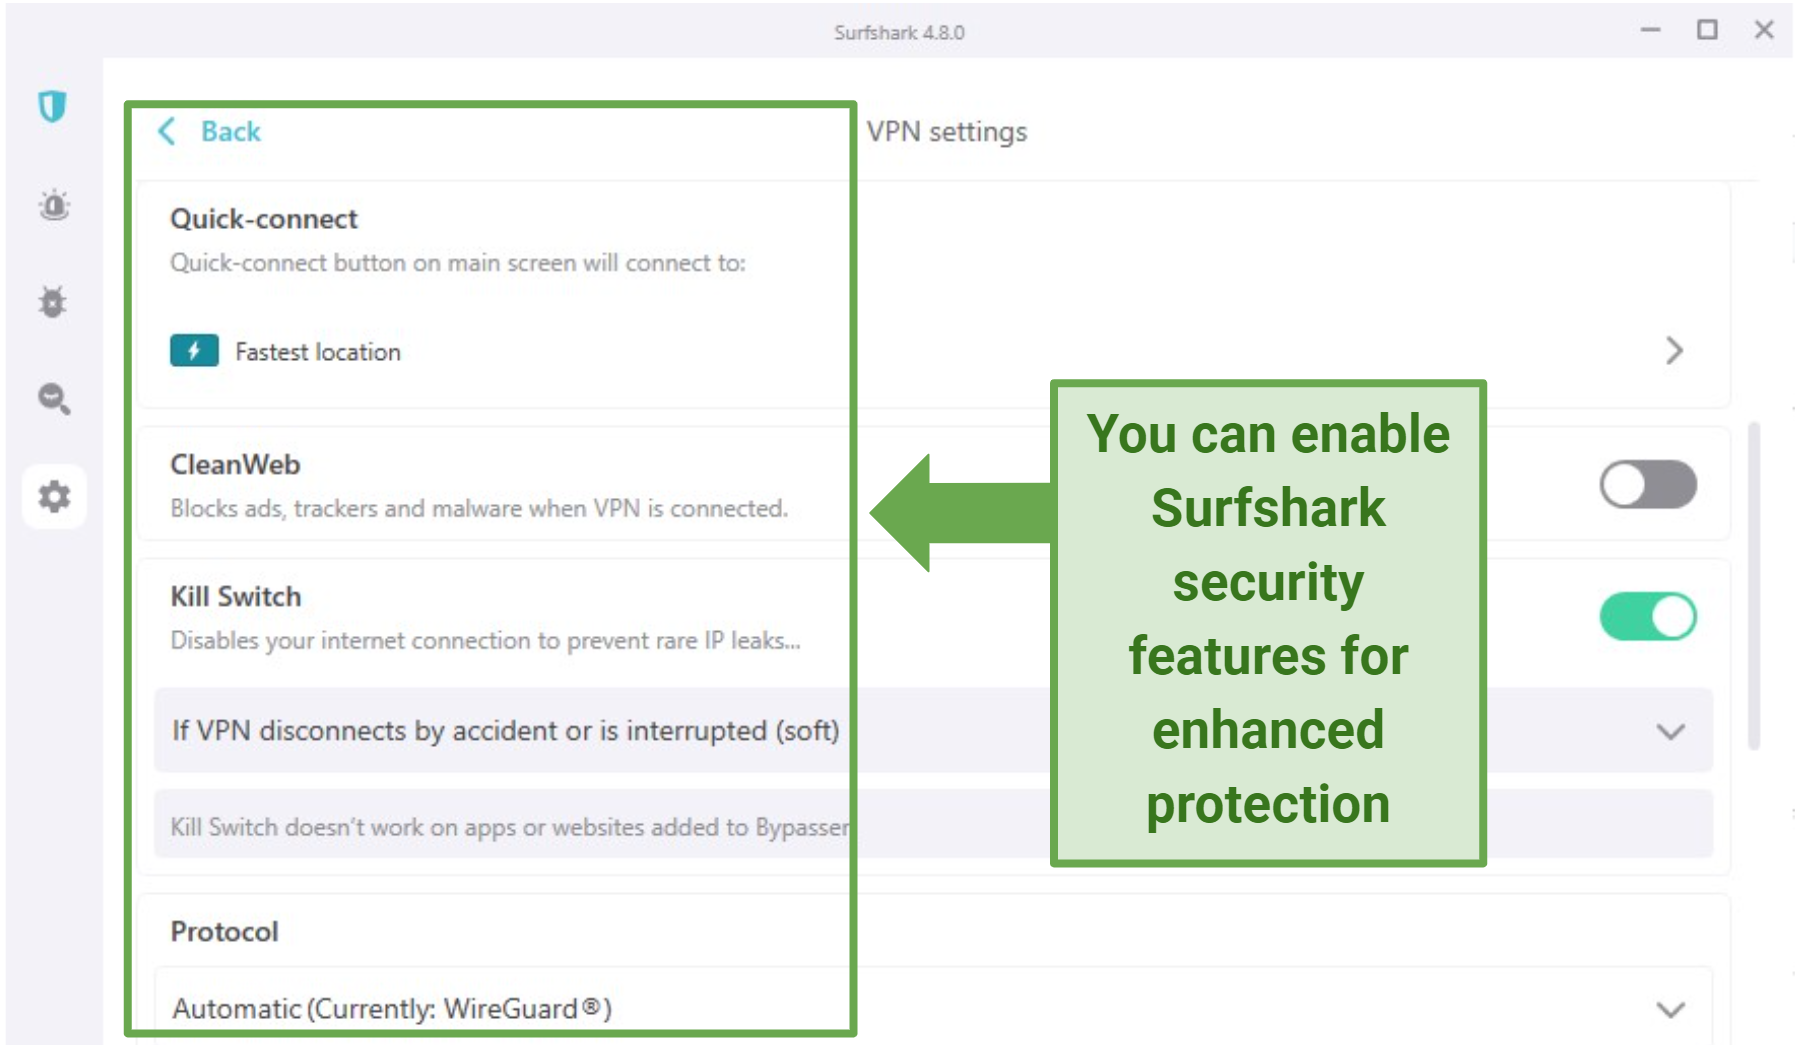 A screenshot of Surfshark security features